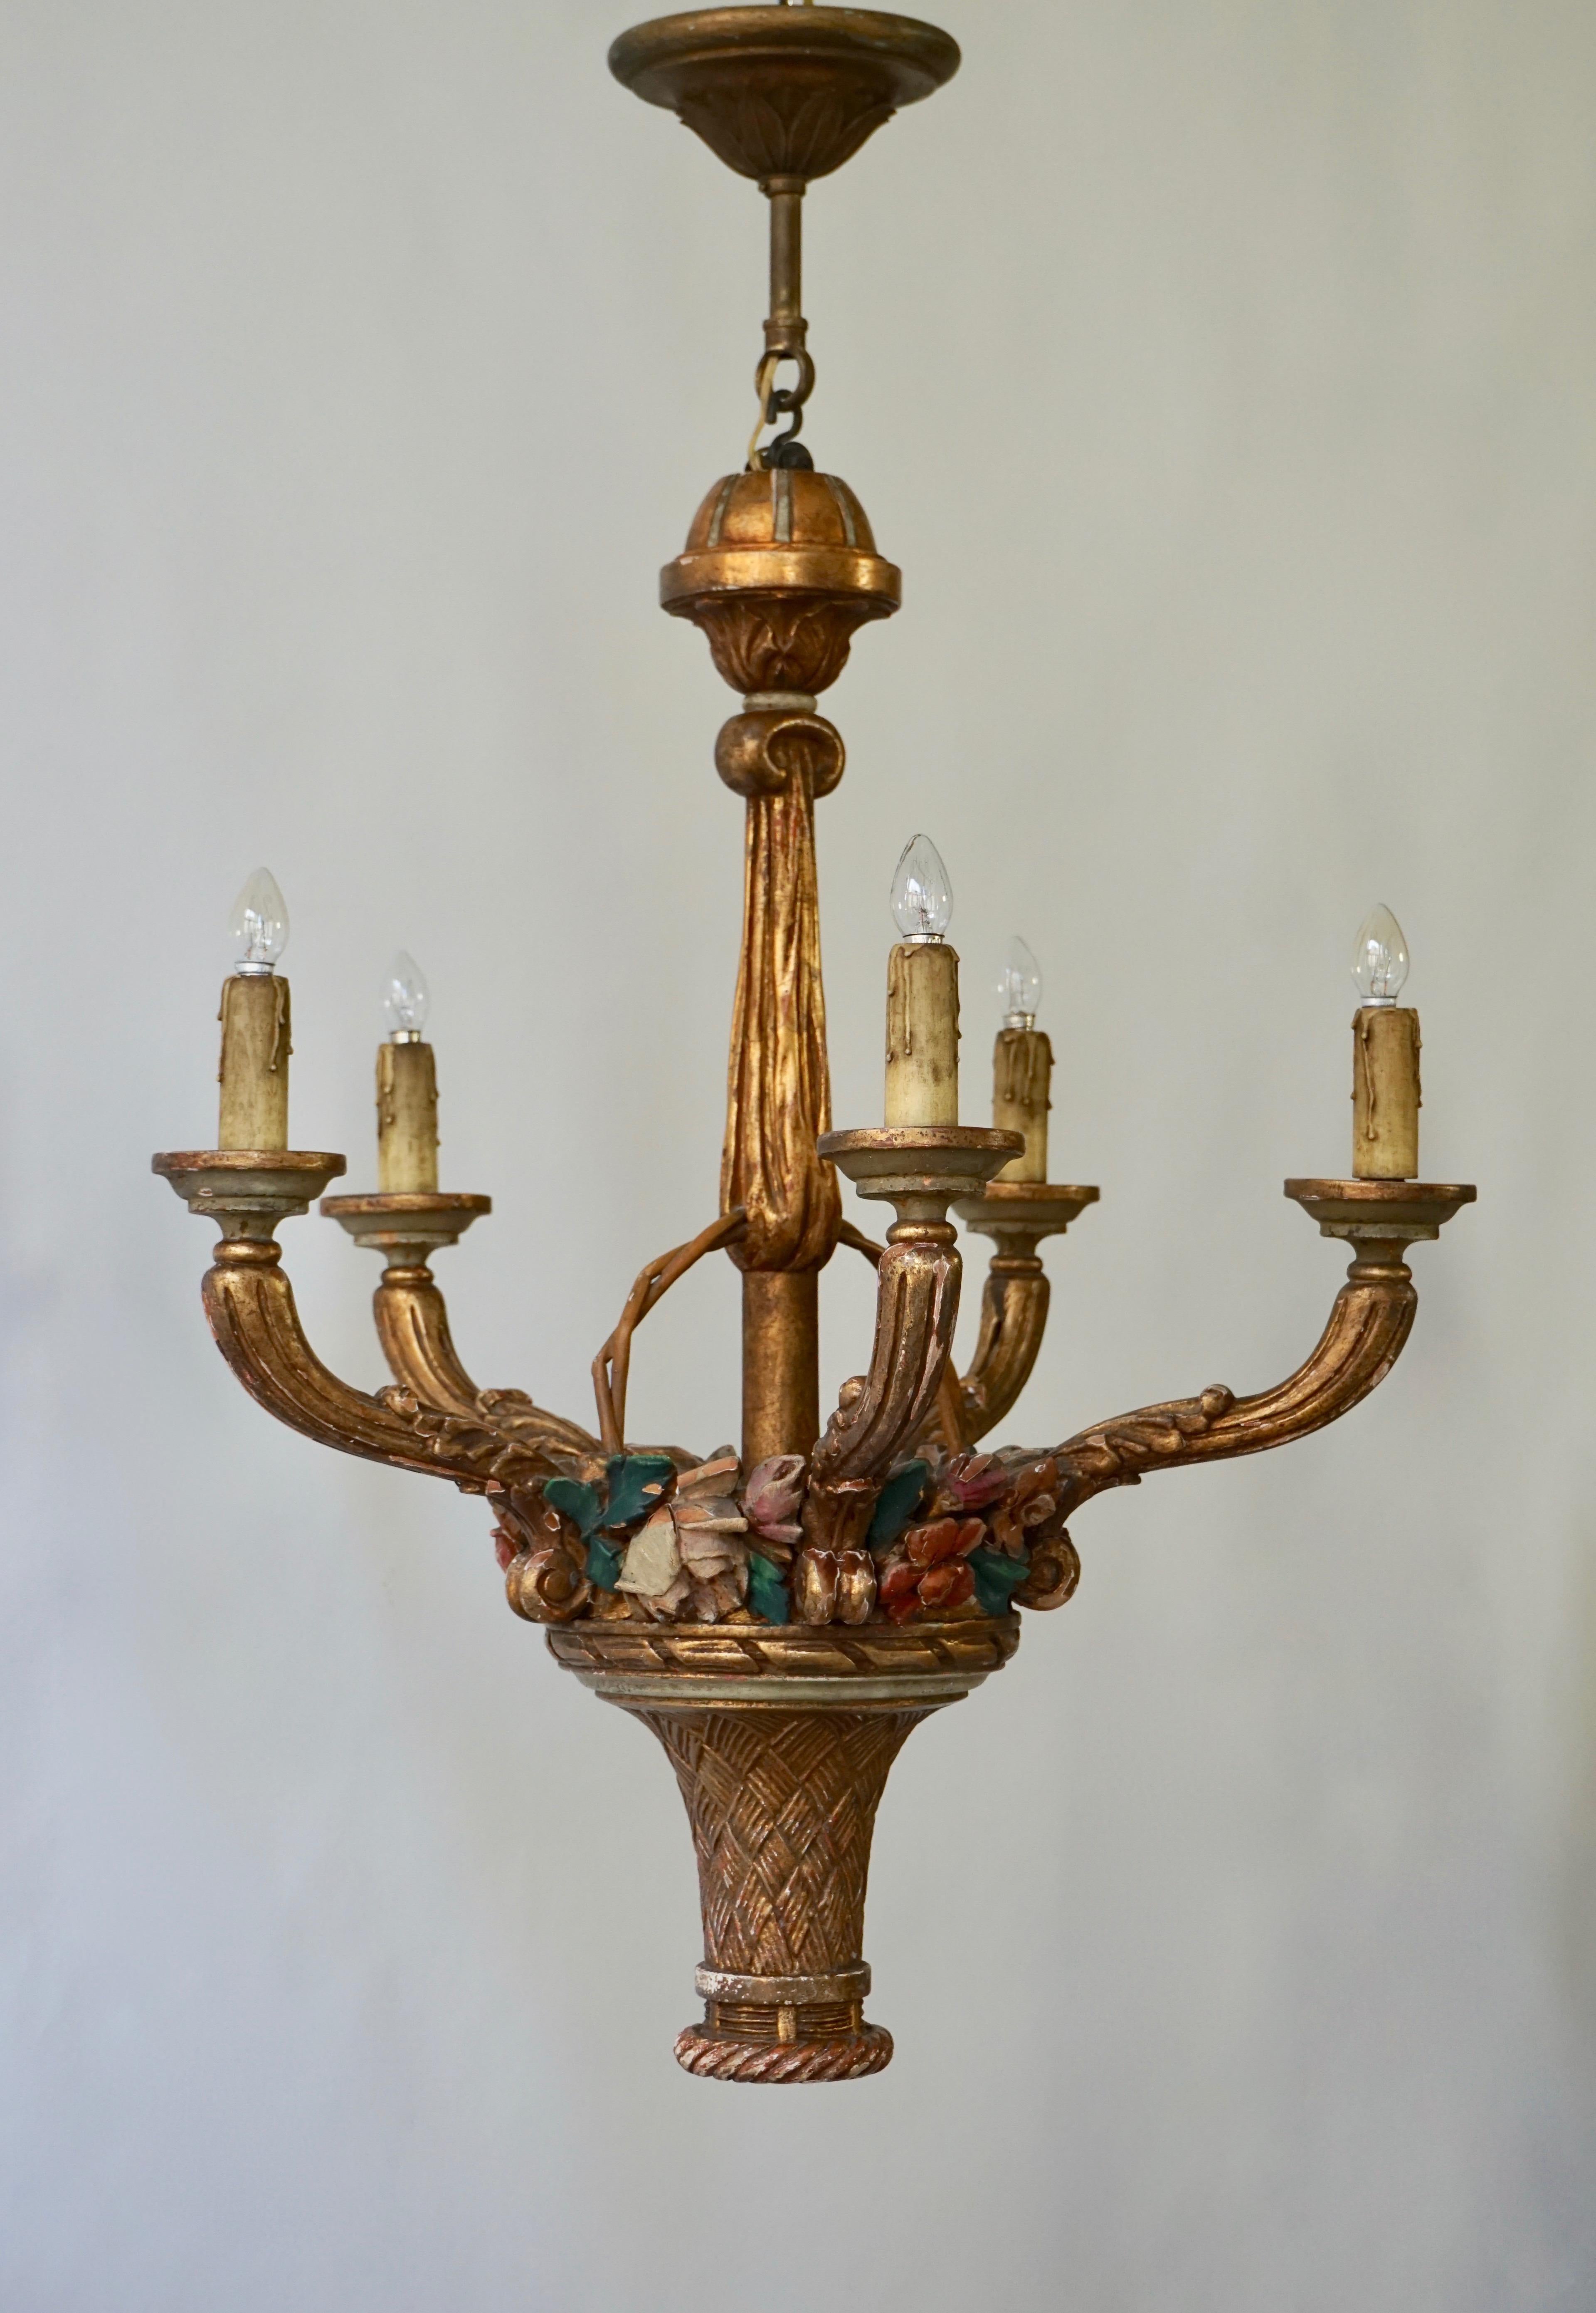 Italian five-light giltwood chandelier with flowers.
Measures: Diameter 51 cm.
Height fixture 66 cm.
Total height 80 cm.
Five E14 bulbs.